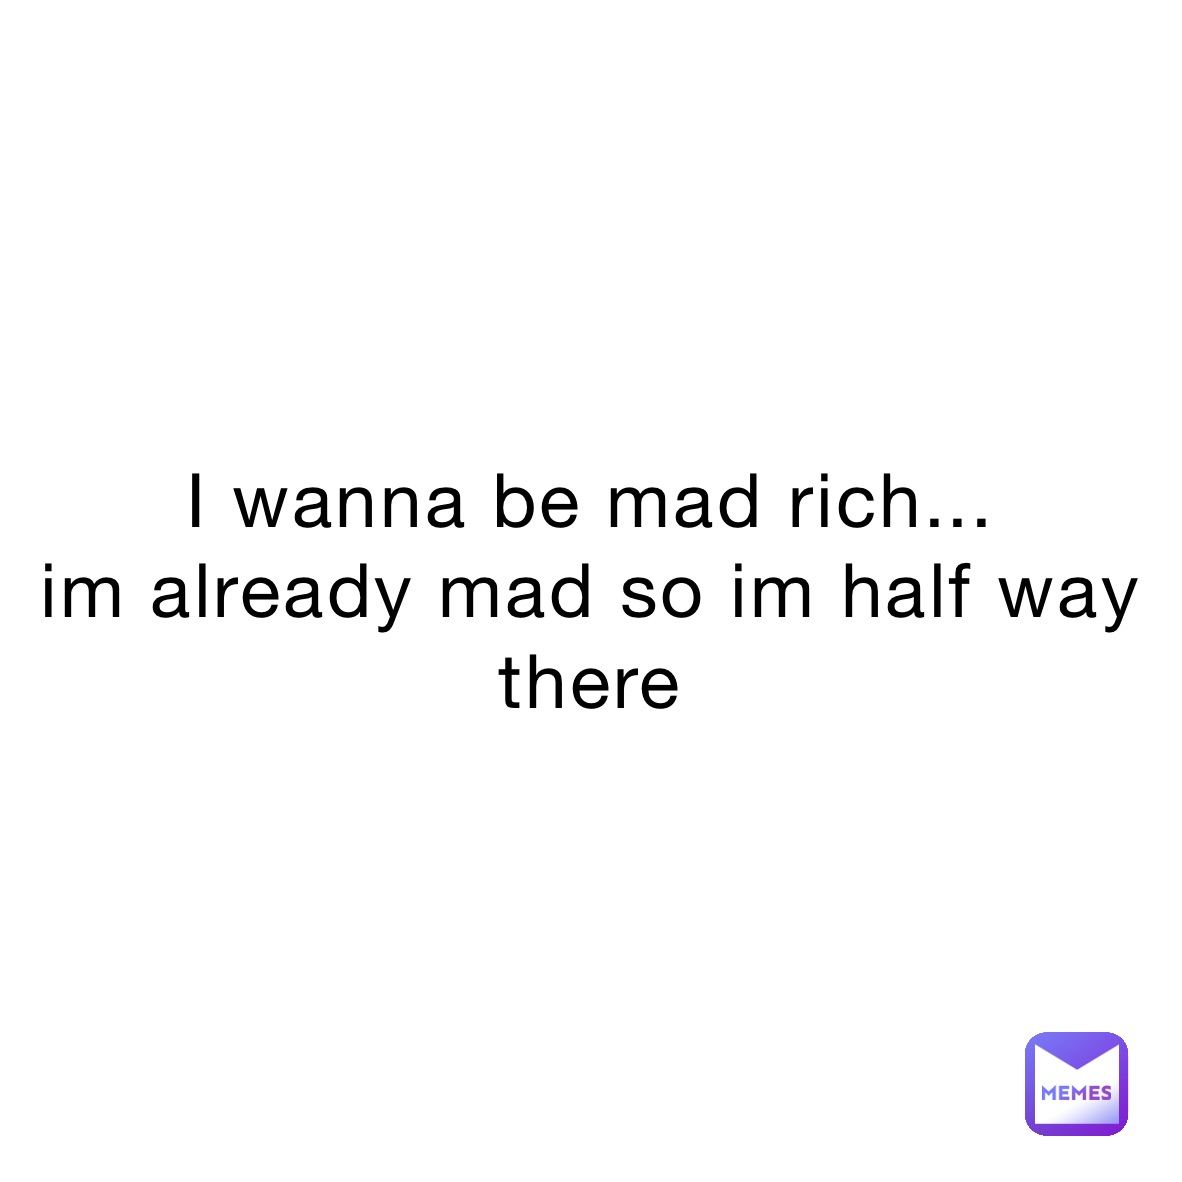 I wanna be mad rich...
im already mad so im half way there